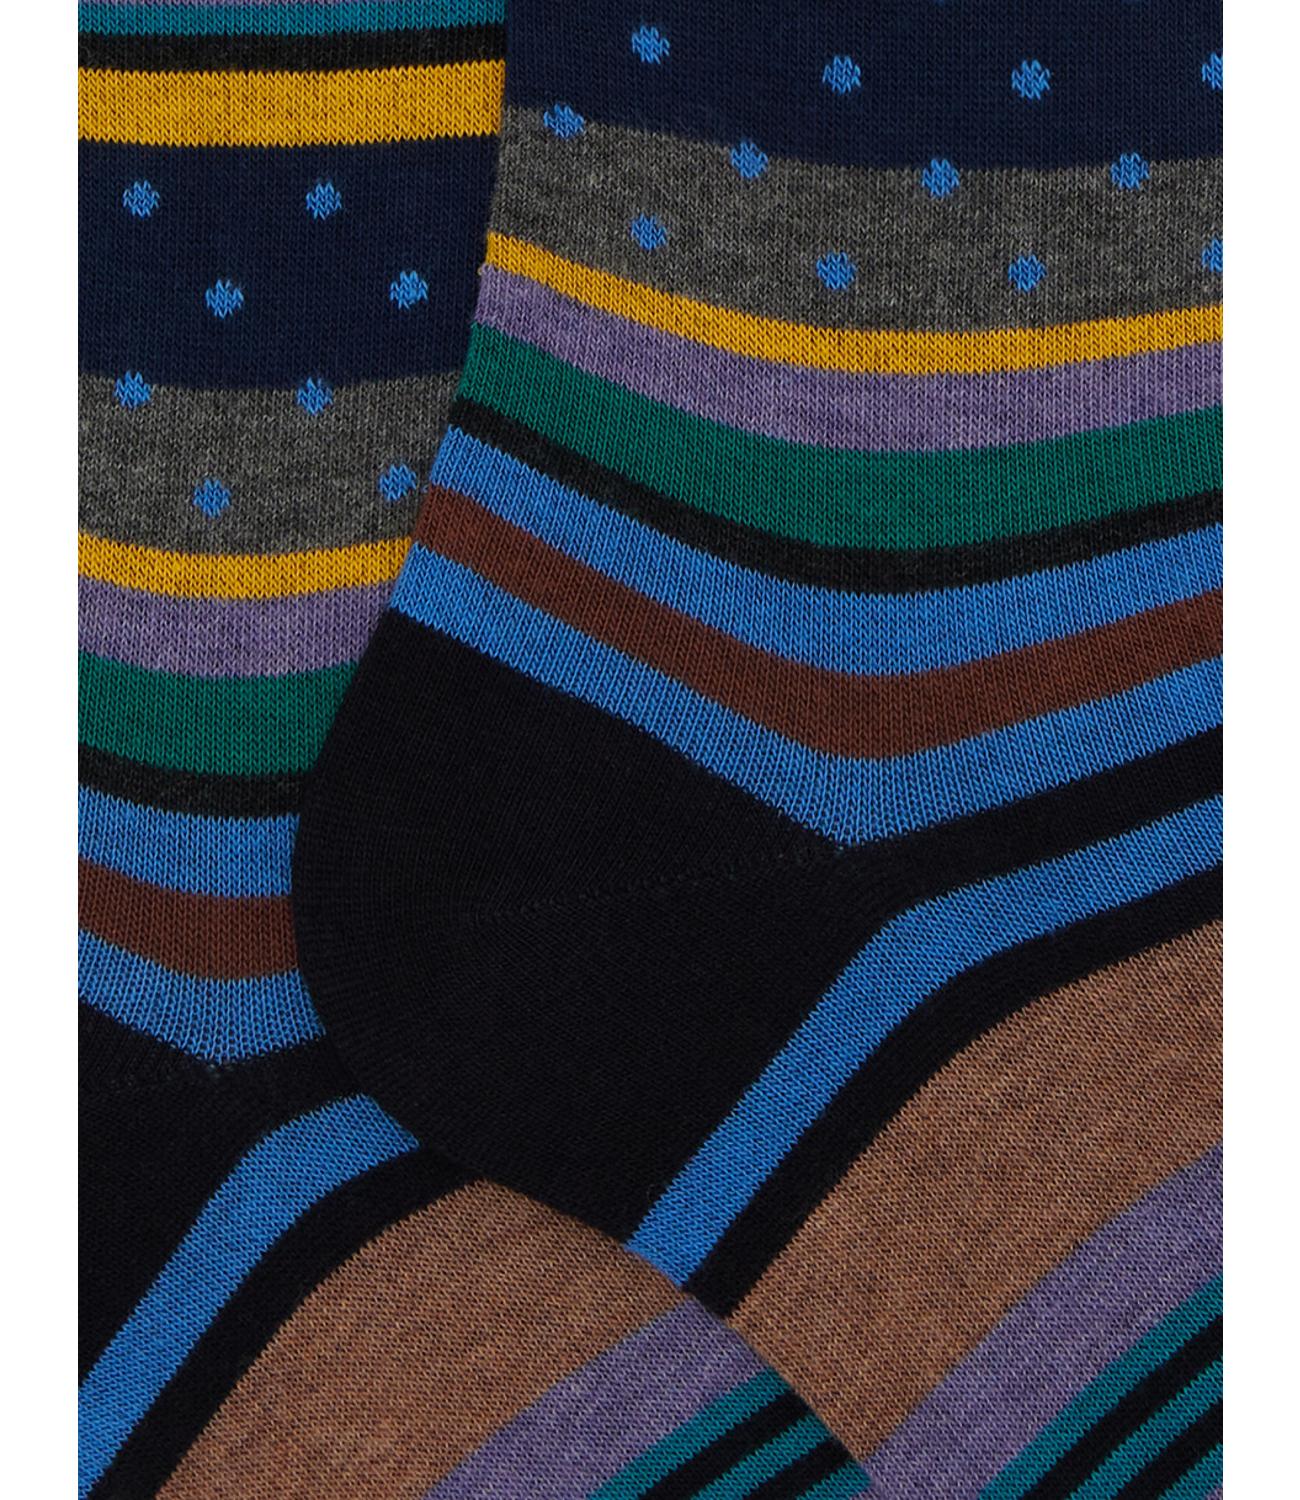 Multistripe and polka dots men's long socks